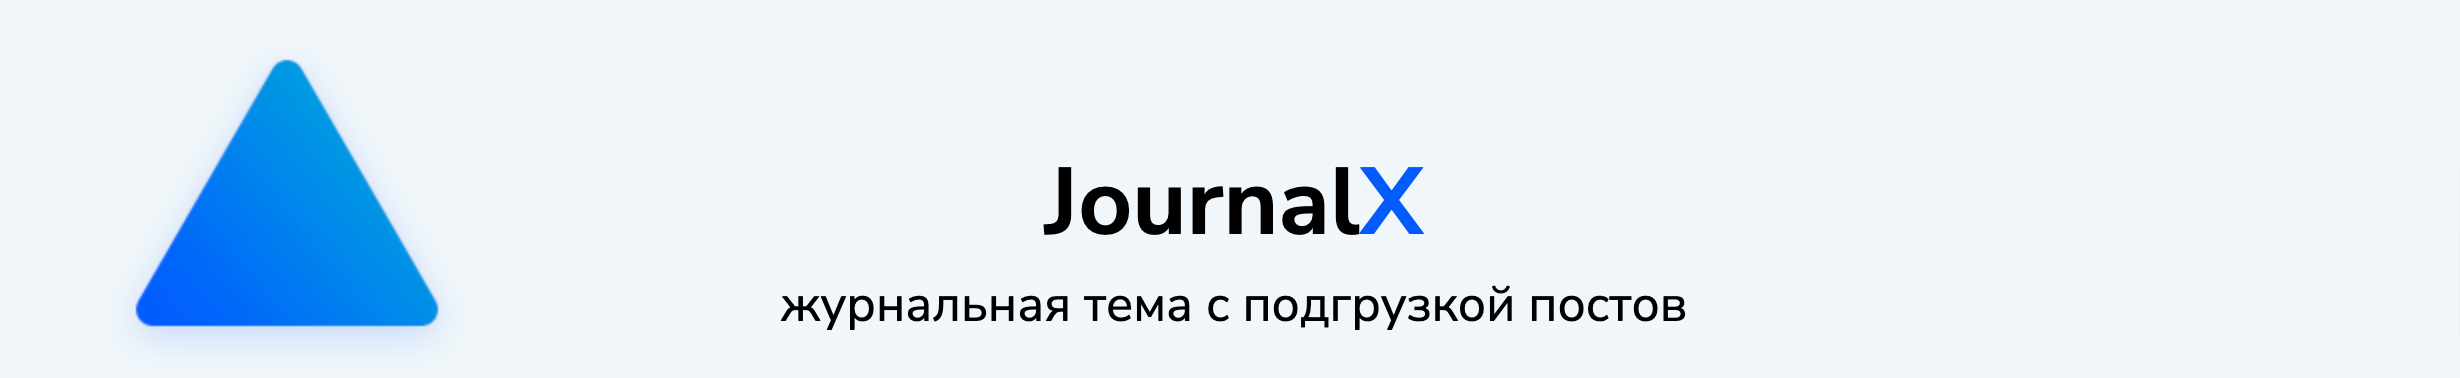 journalx от разработчиков WPShop